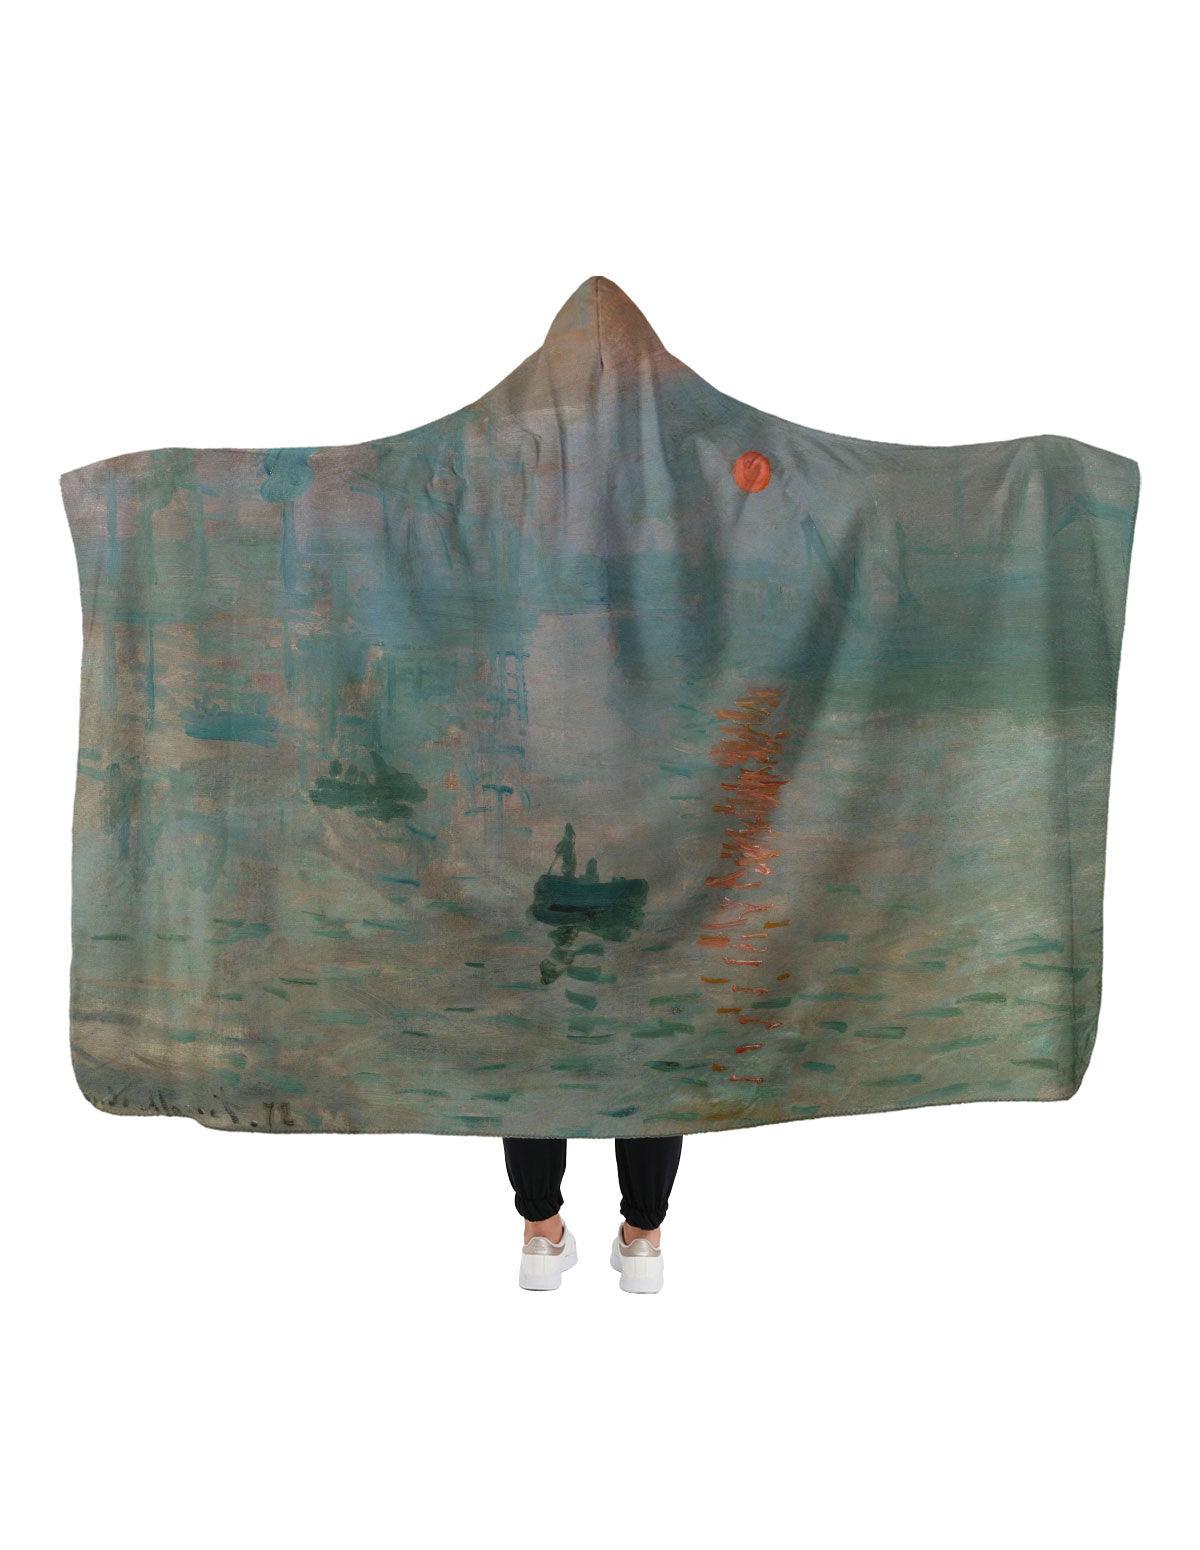 Claude Monet Impression, Sunrise Hoodie Blanket - artucky-US - battaniye, claude, giyim, import_2022_07_19_113509, impression, kapşonlu, kapşonlu battaniye, monet, sunrise